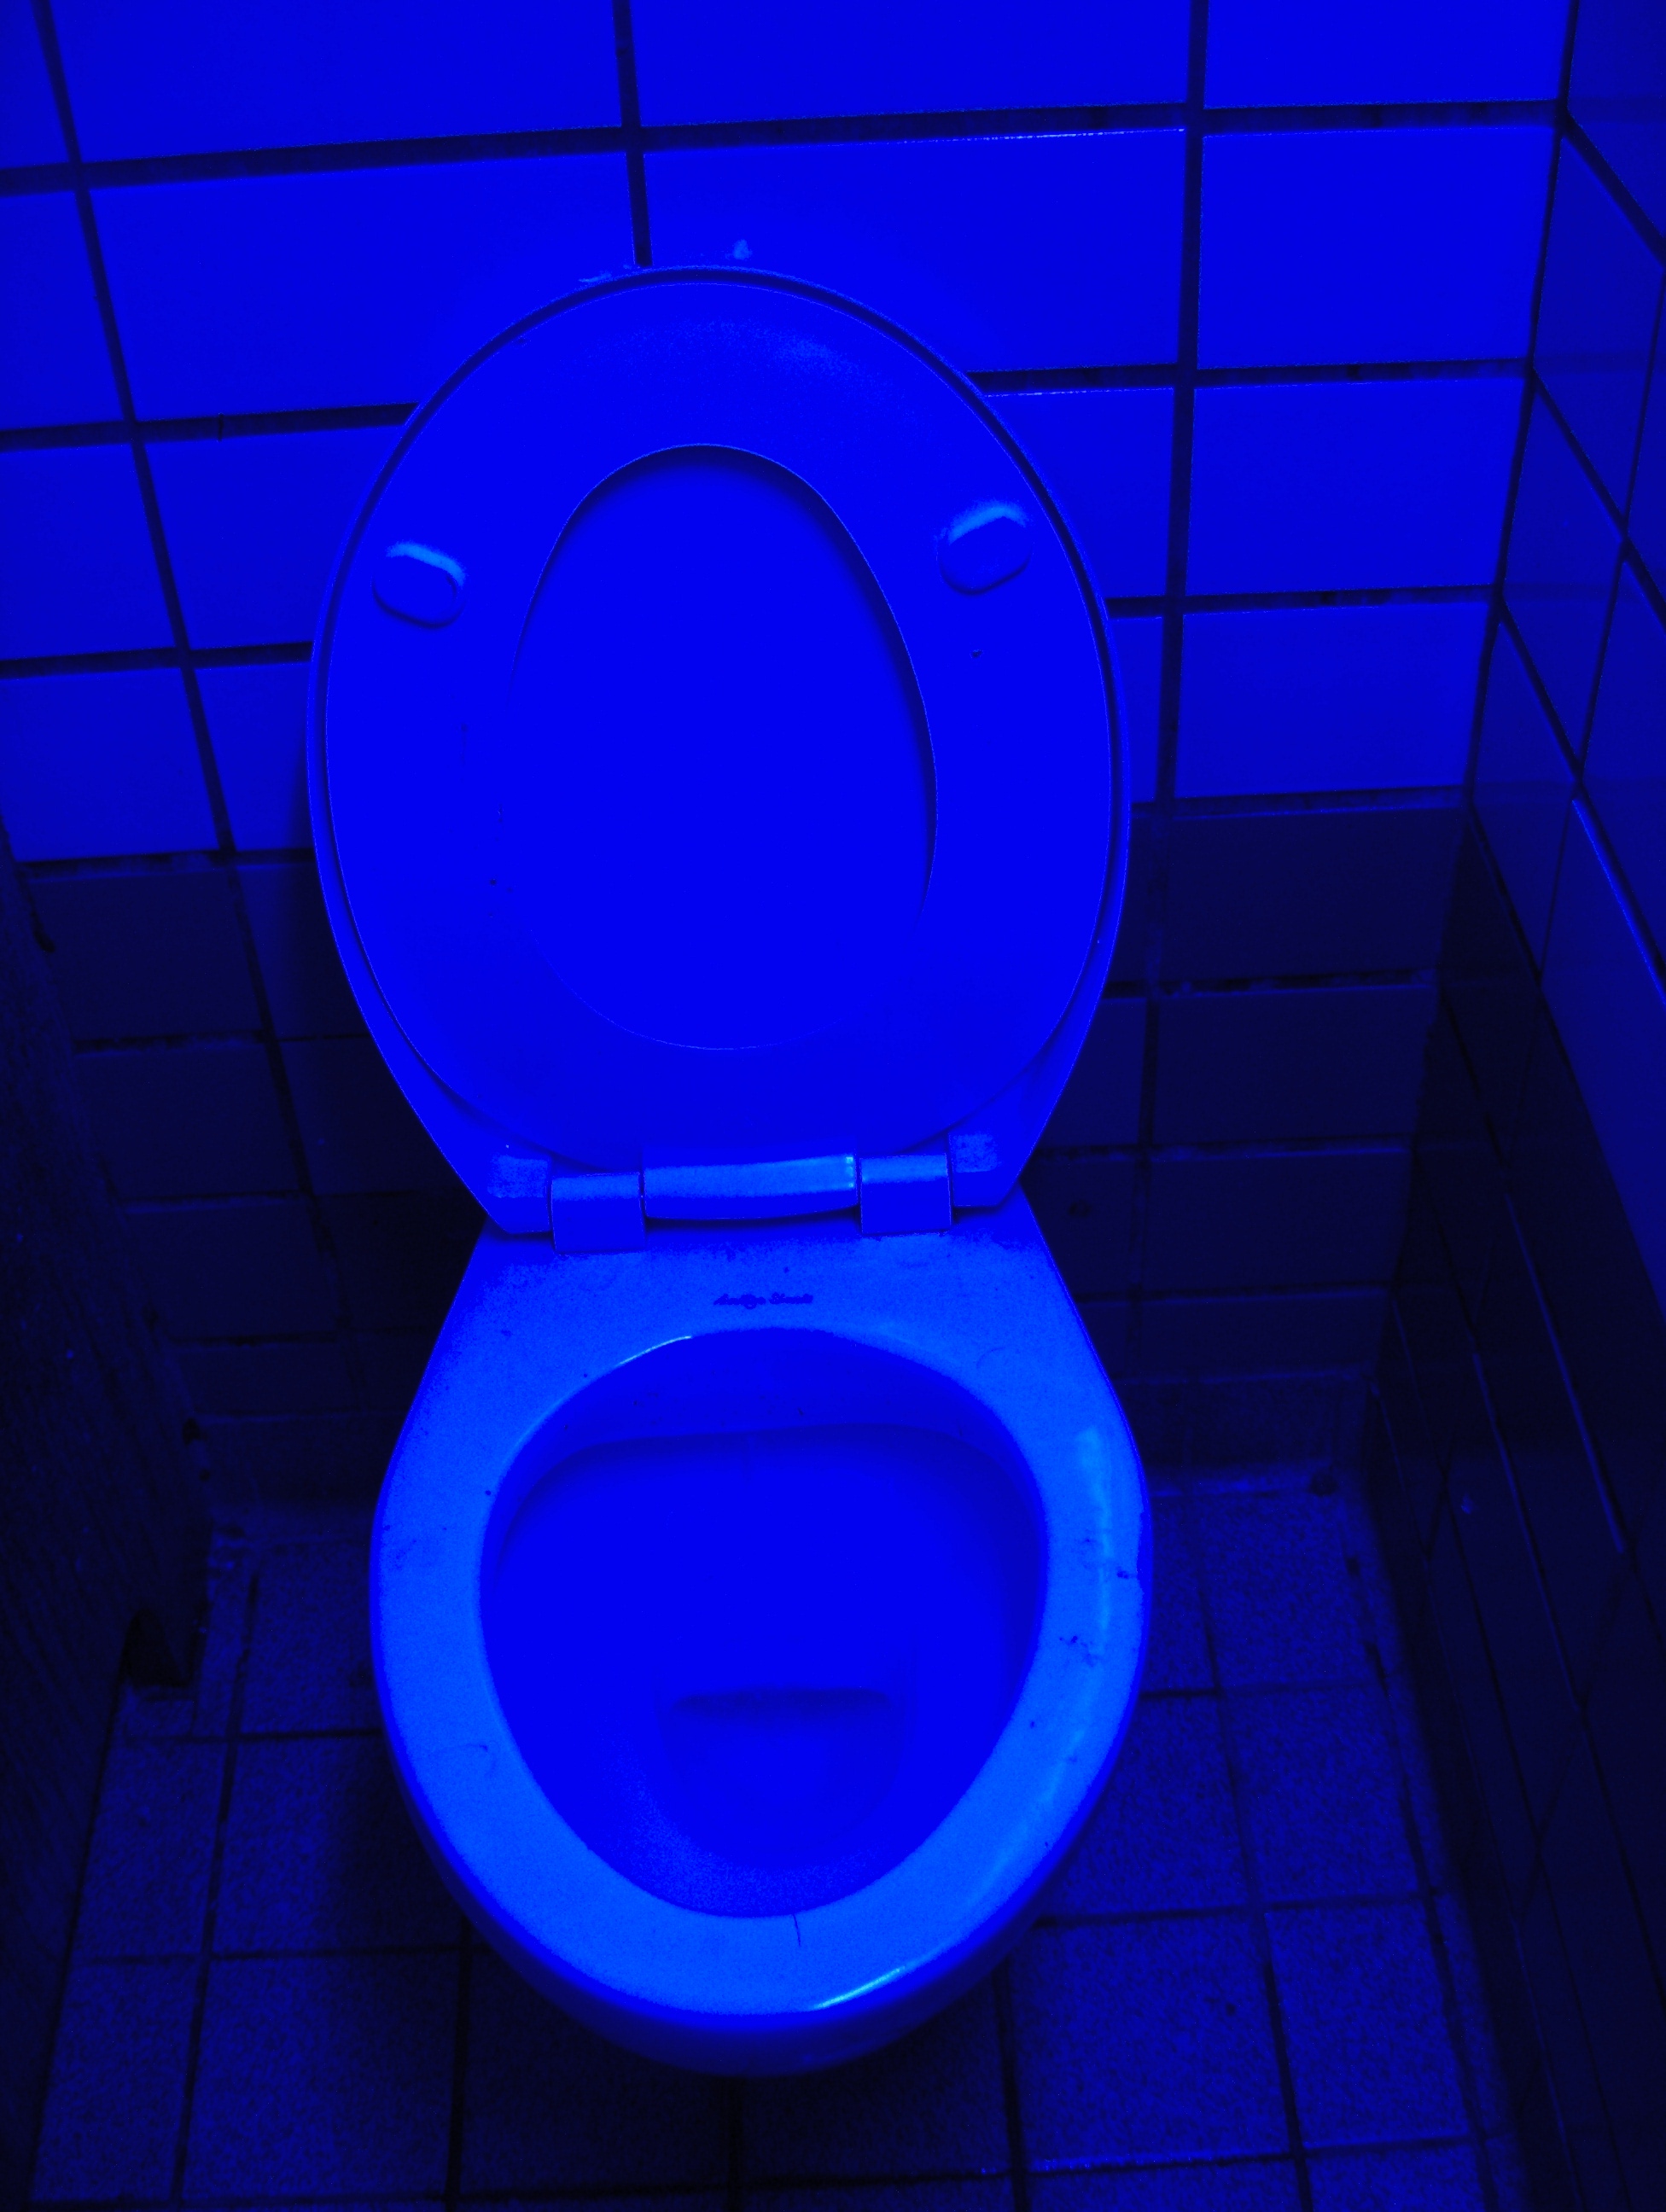 File:Blue-light-toilets.JPG - Wikimedia Commons